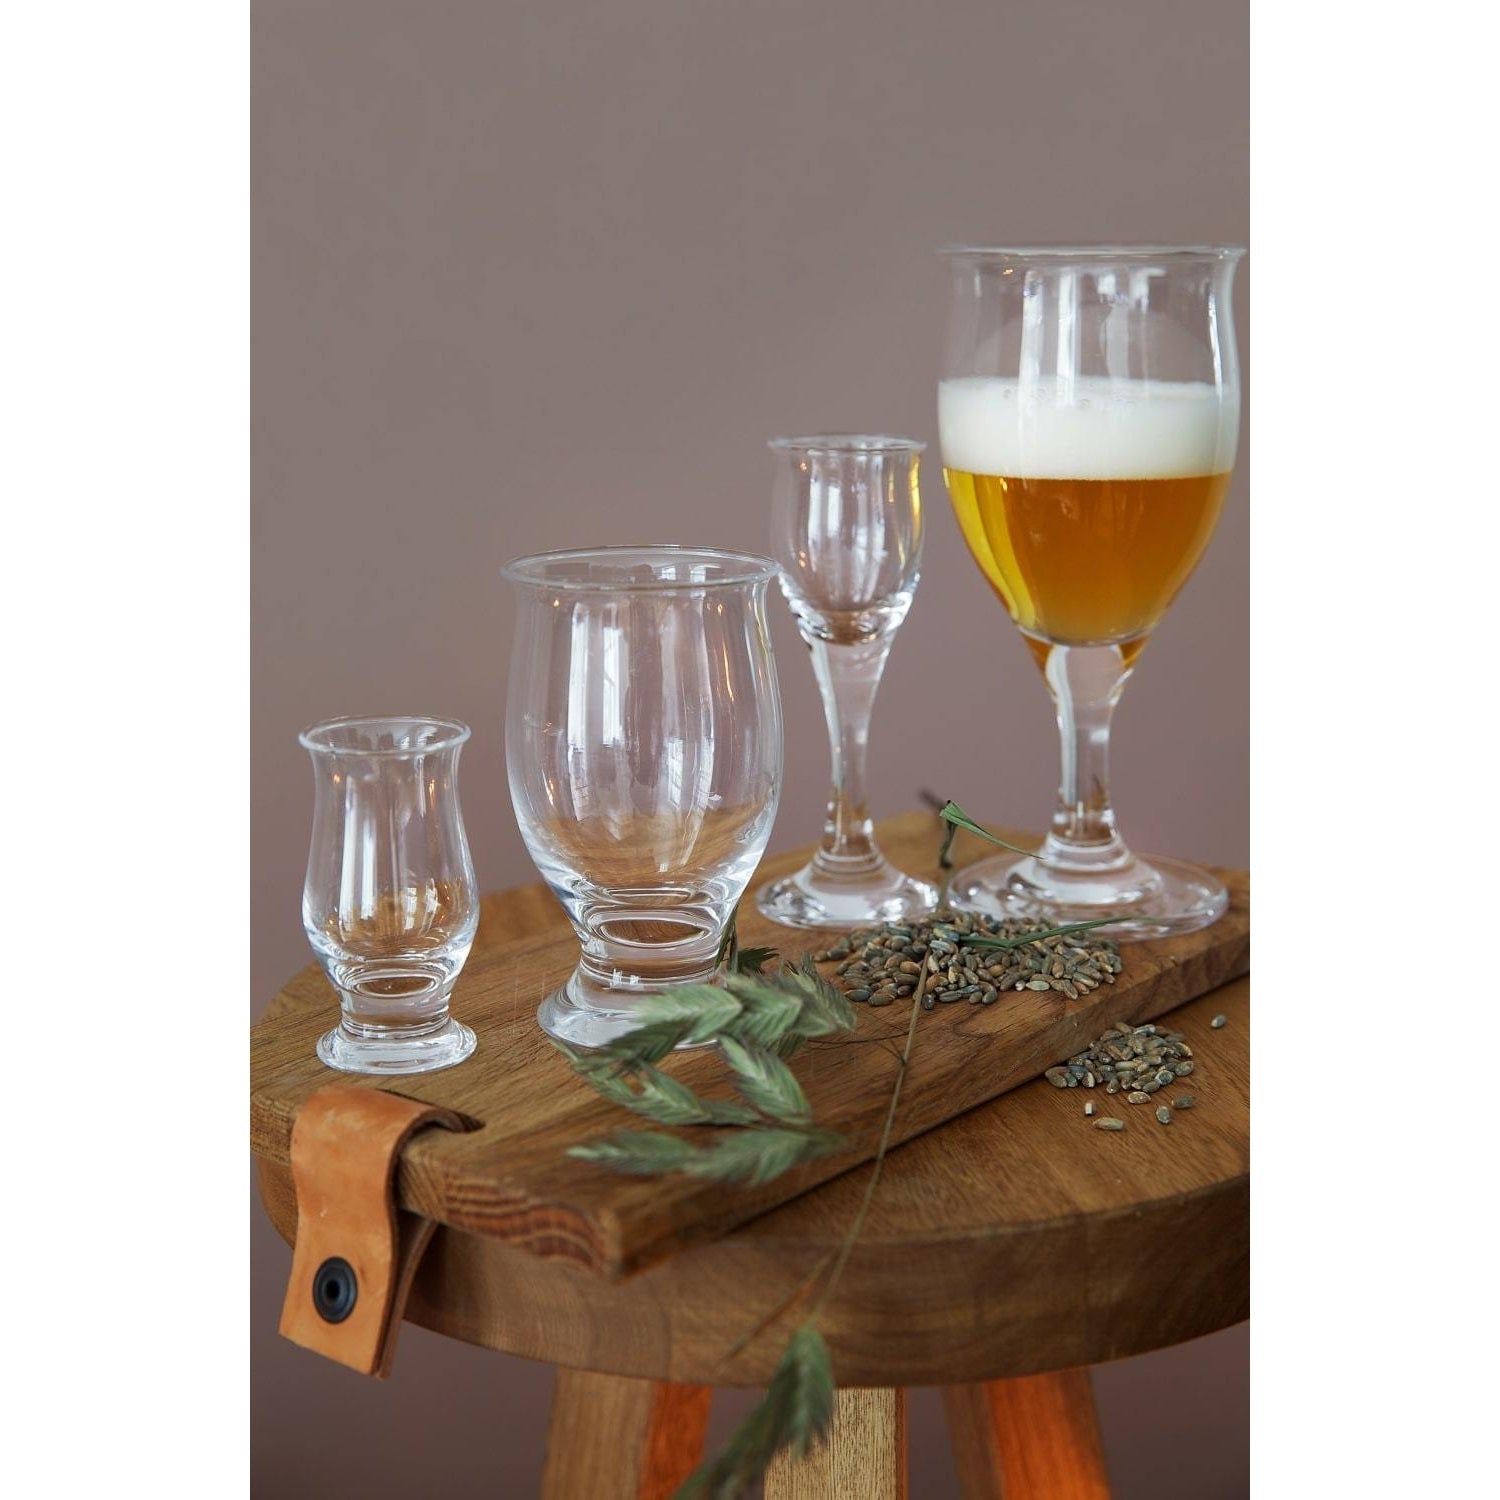 Holmegaard Idéelle bierglas in stijl